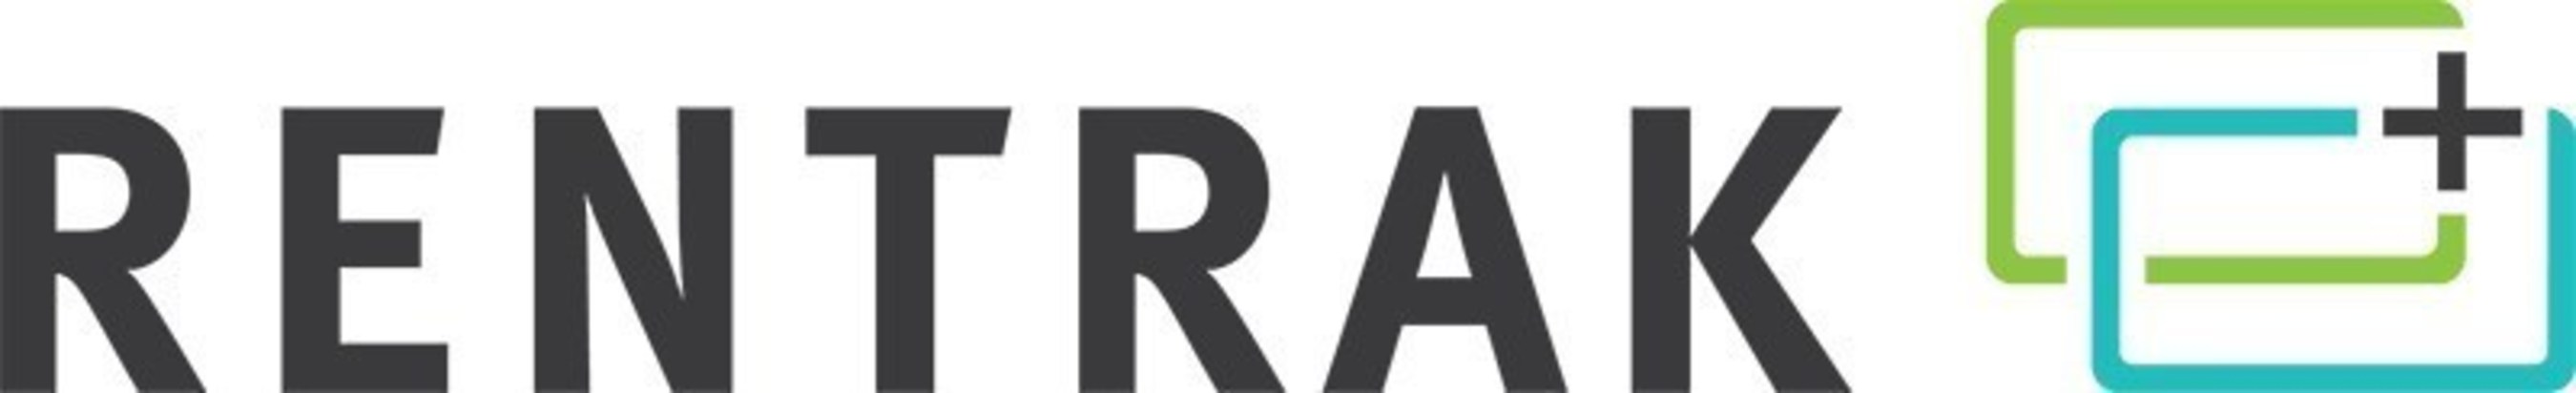 Rentrak Corporation logo